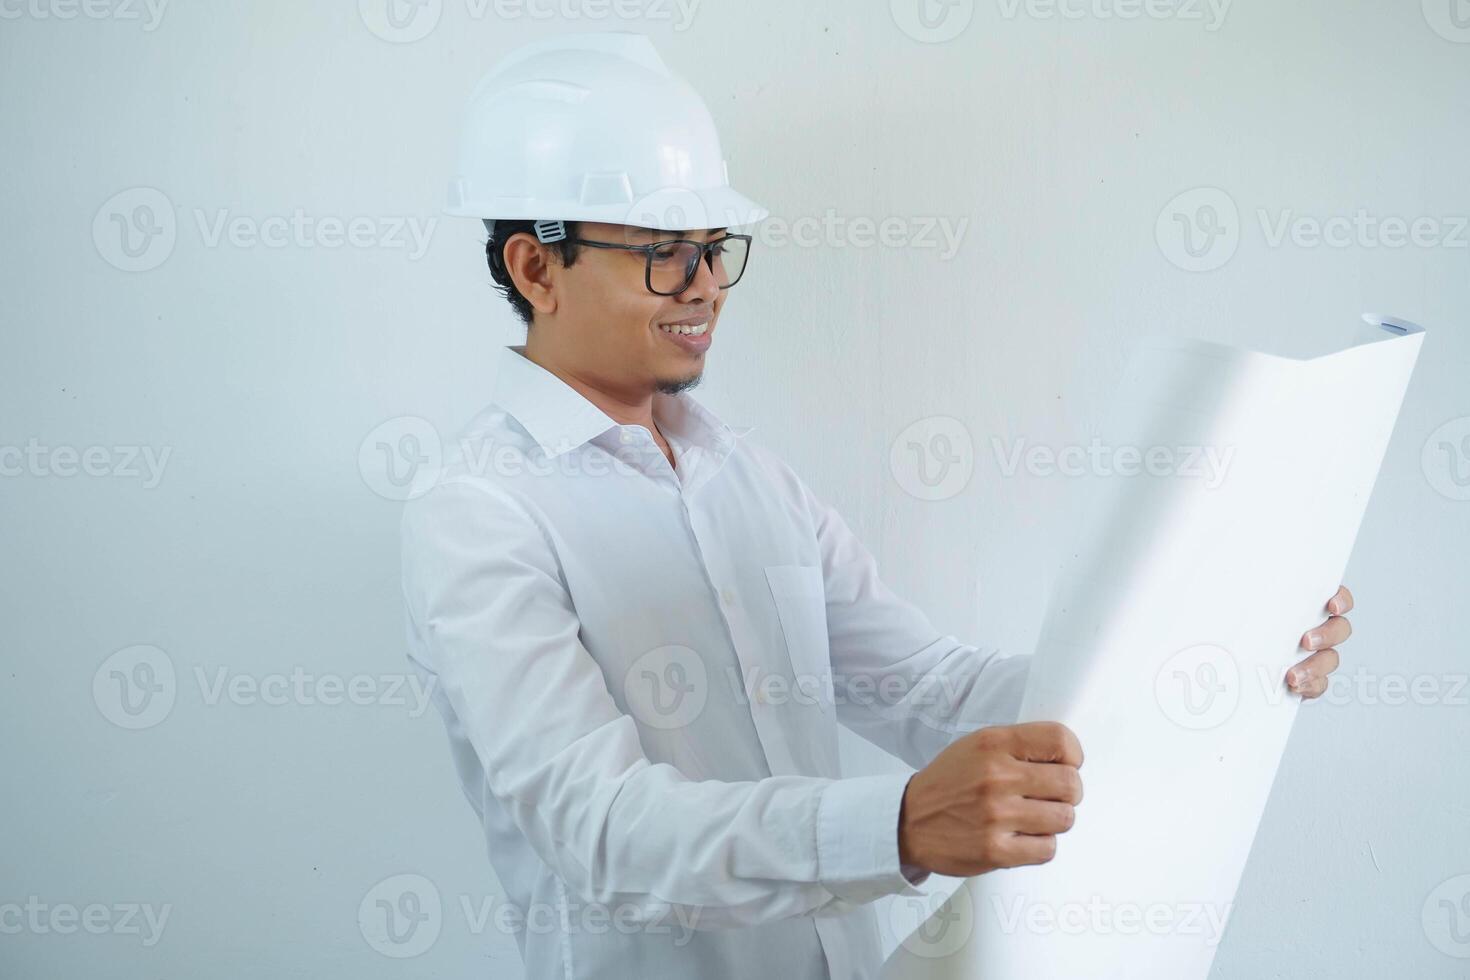 jong Aziatisch mannetje architect ingenieur glimlachen en Holding bouwkunde blauwdrukken geïsoleerd Aan wit achtergrond. foto